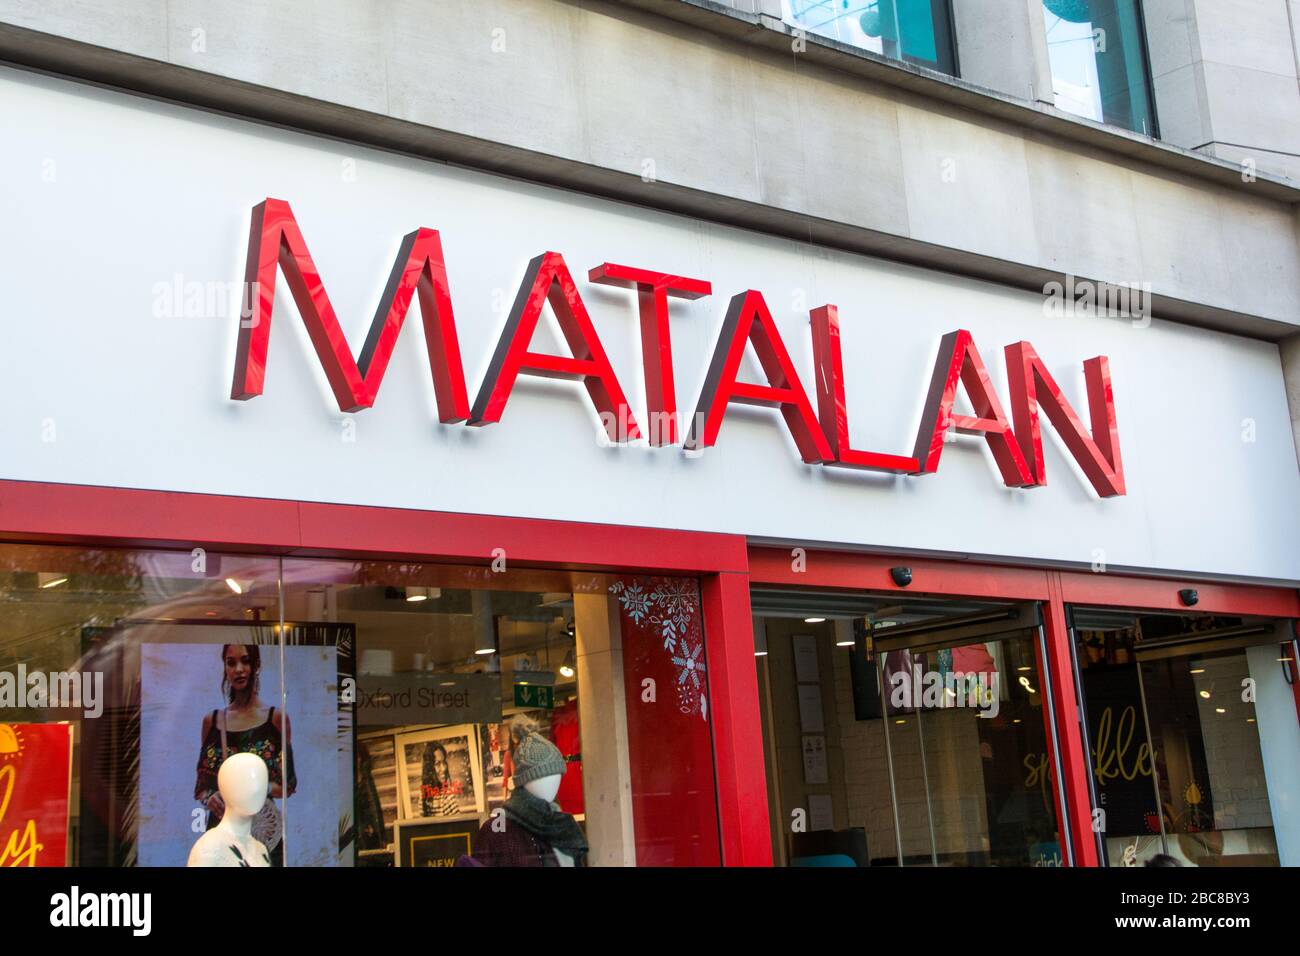 Matalan- British high street brand- exterior logo / signage- London Stock Photo